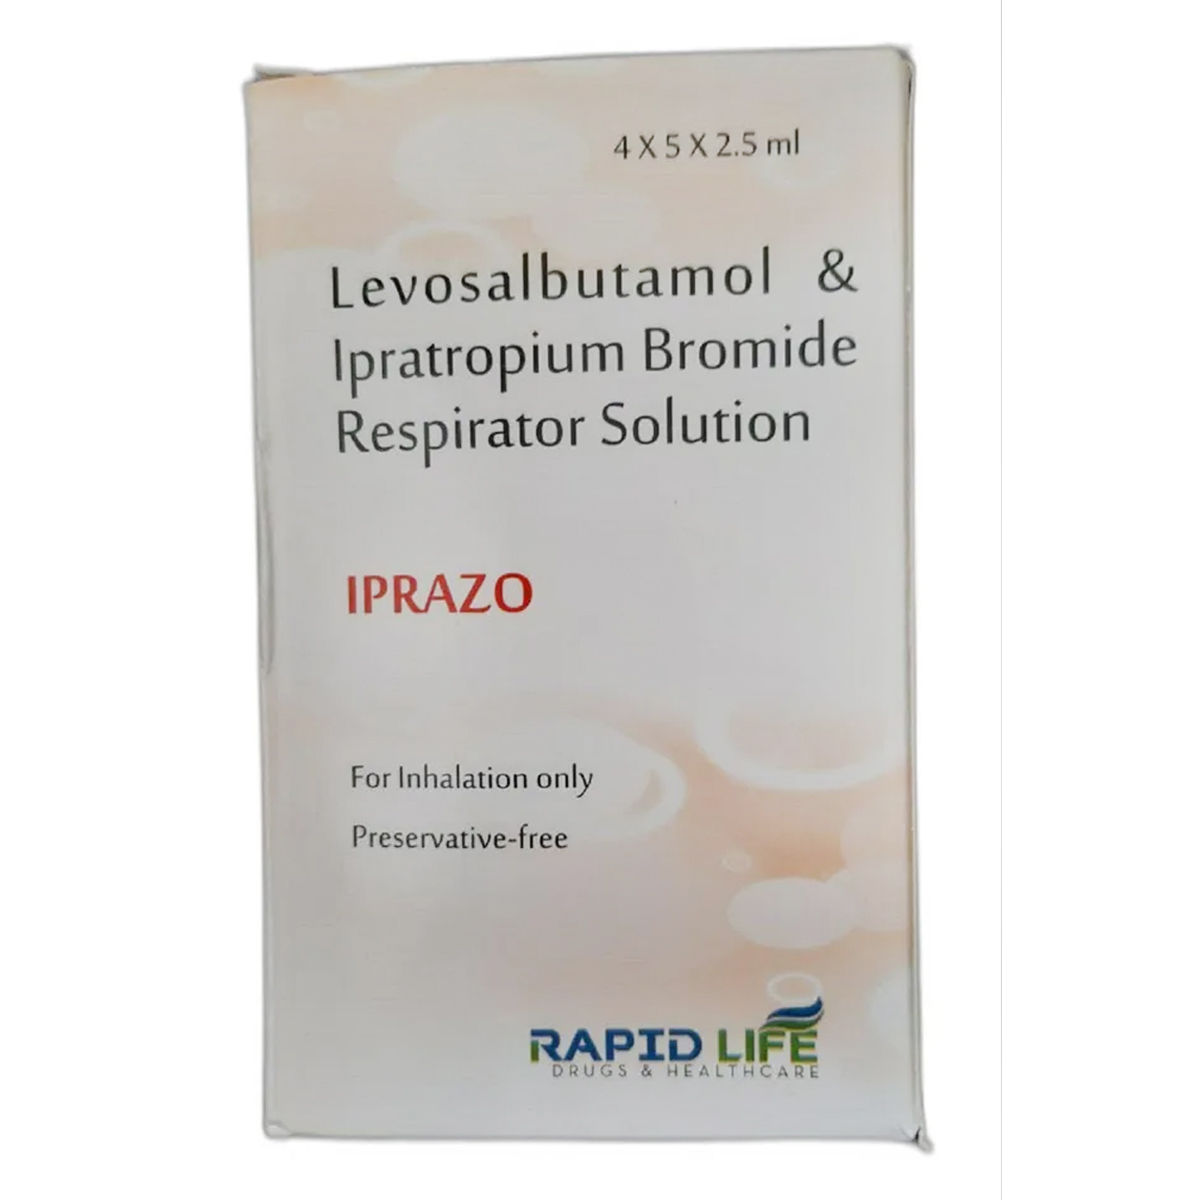 IPRATROPIUM BROMIDE+LEVOSALBUTAMOL Uses, Side Effects and Medicines Apollo Pharmacy hq nude image